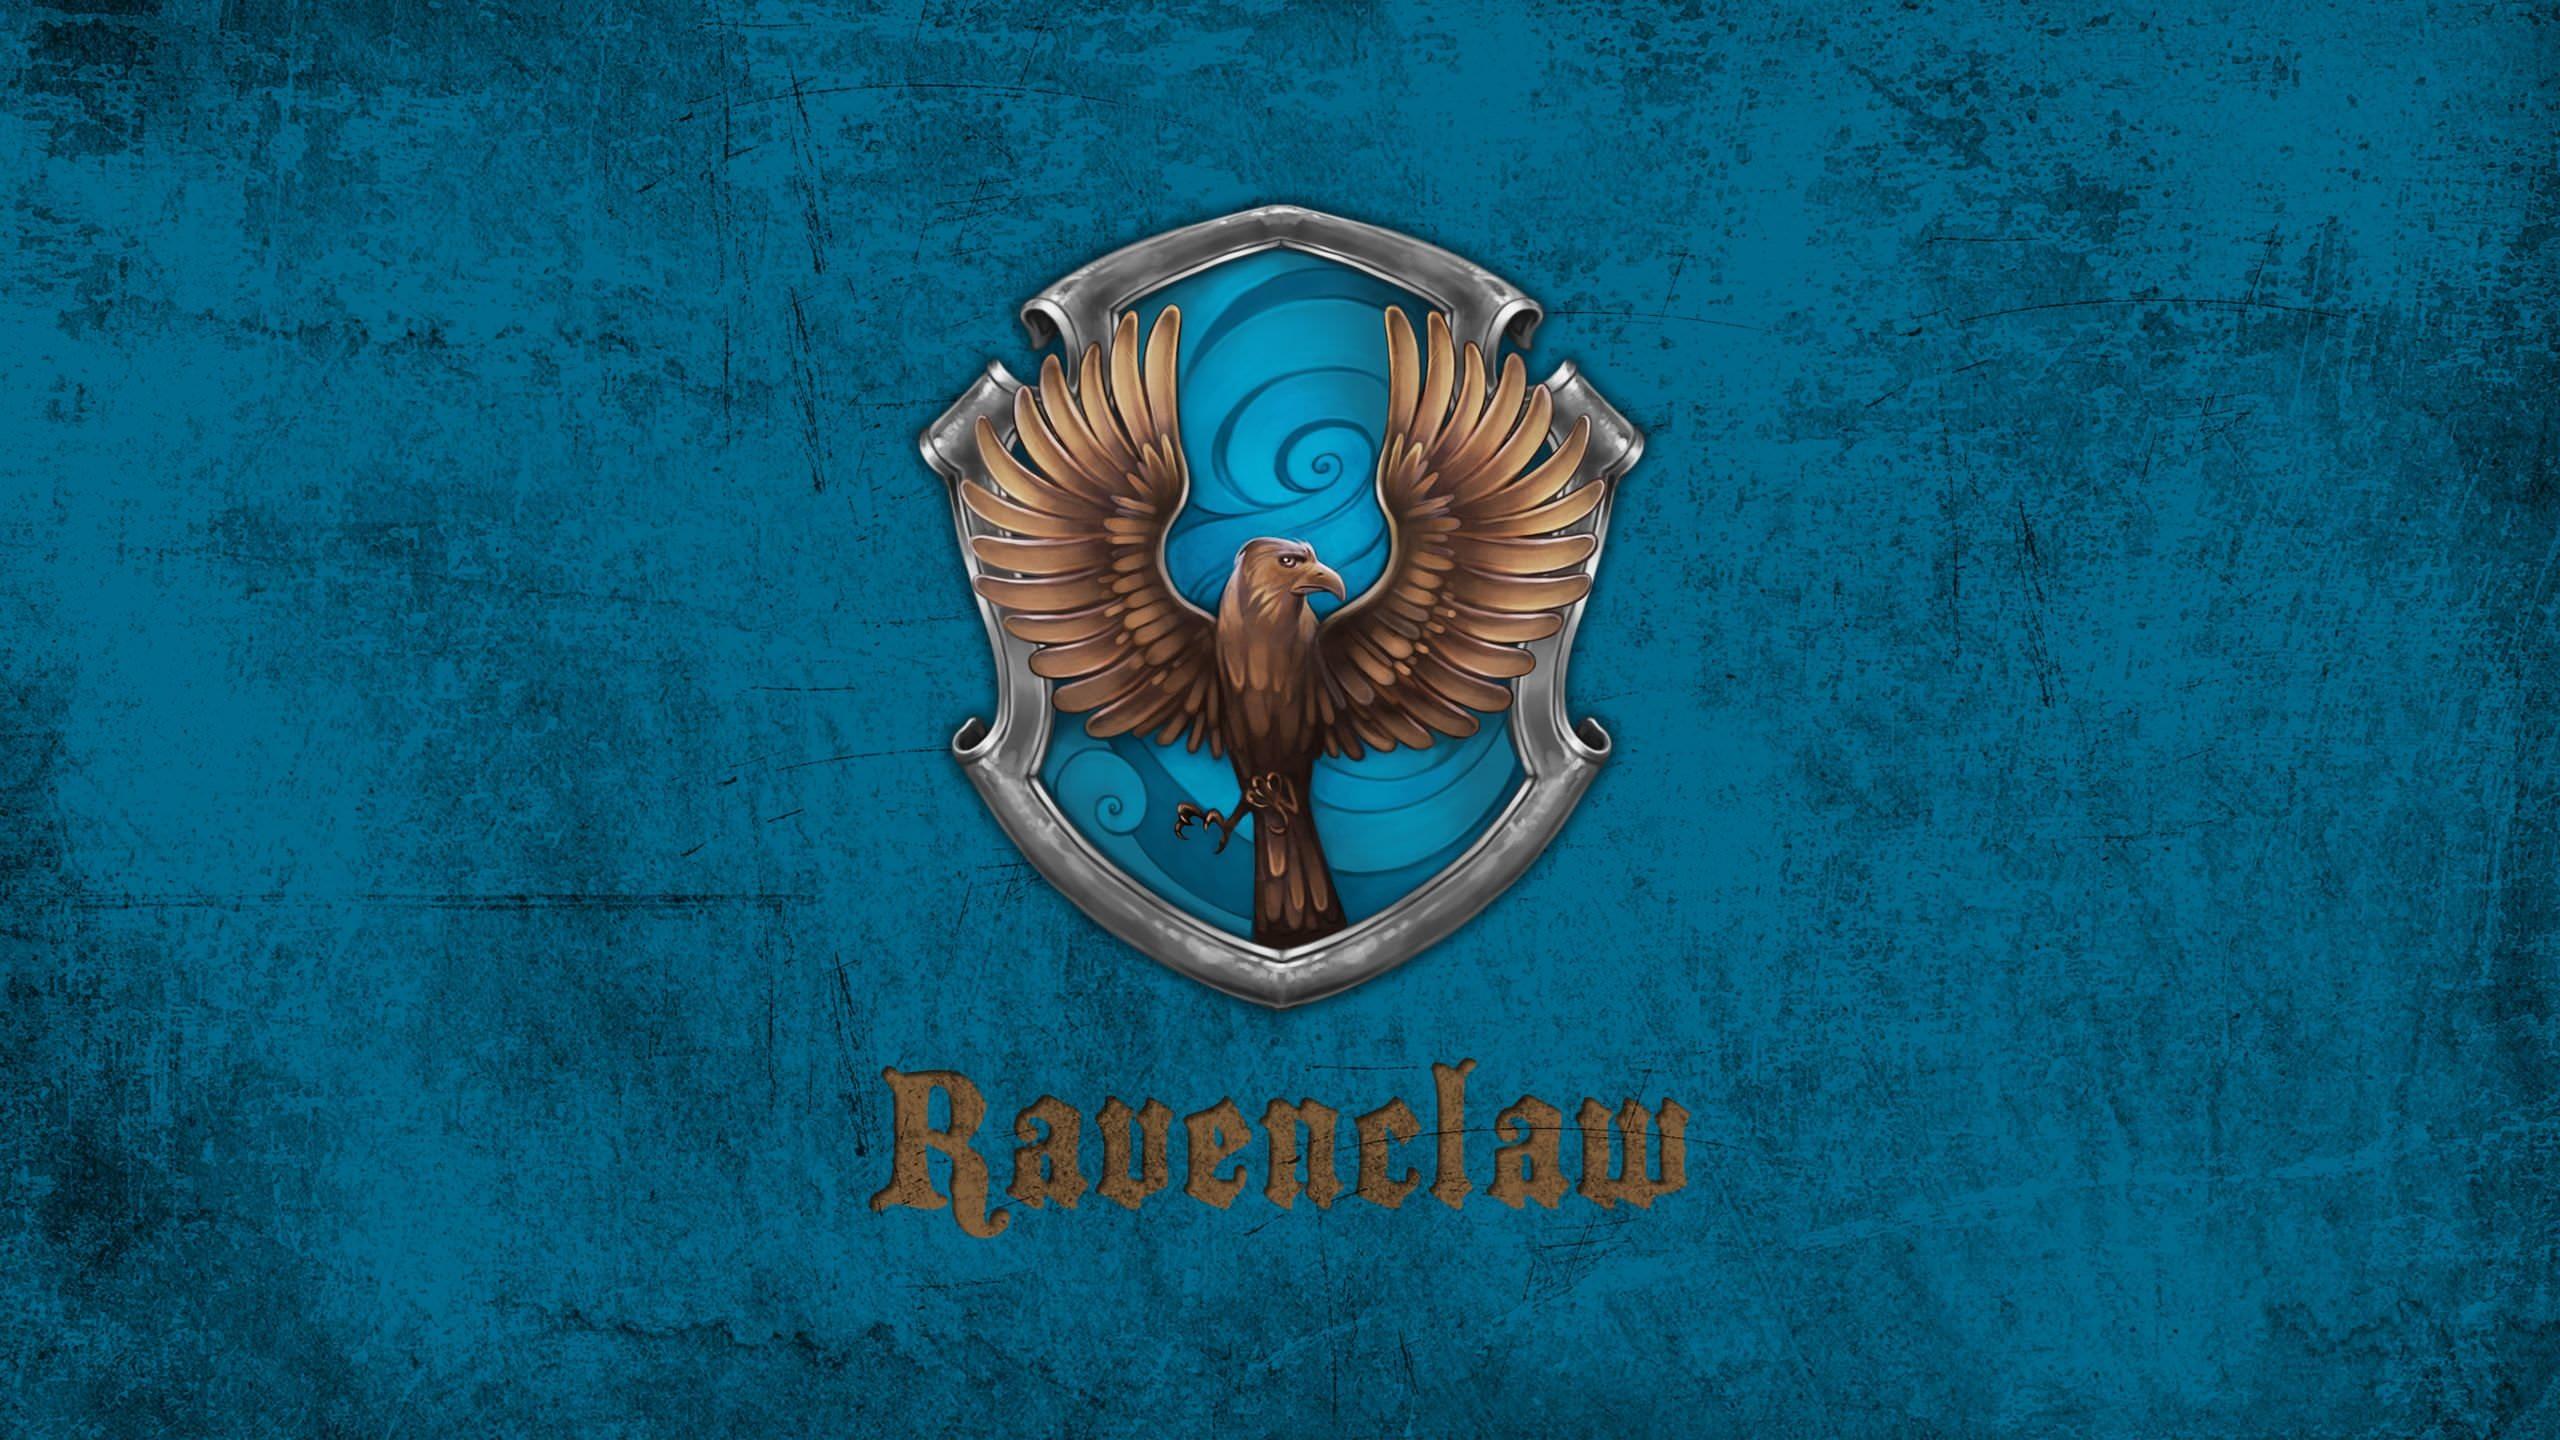 Ravenclaw wallpaper 2560x1440 desktop background